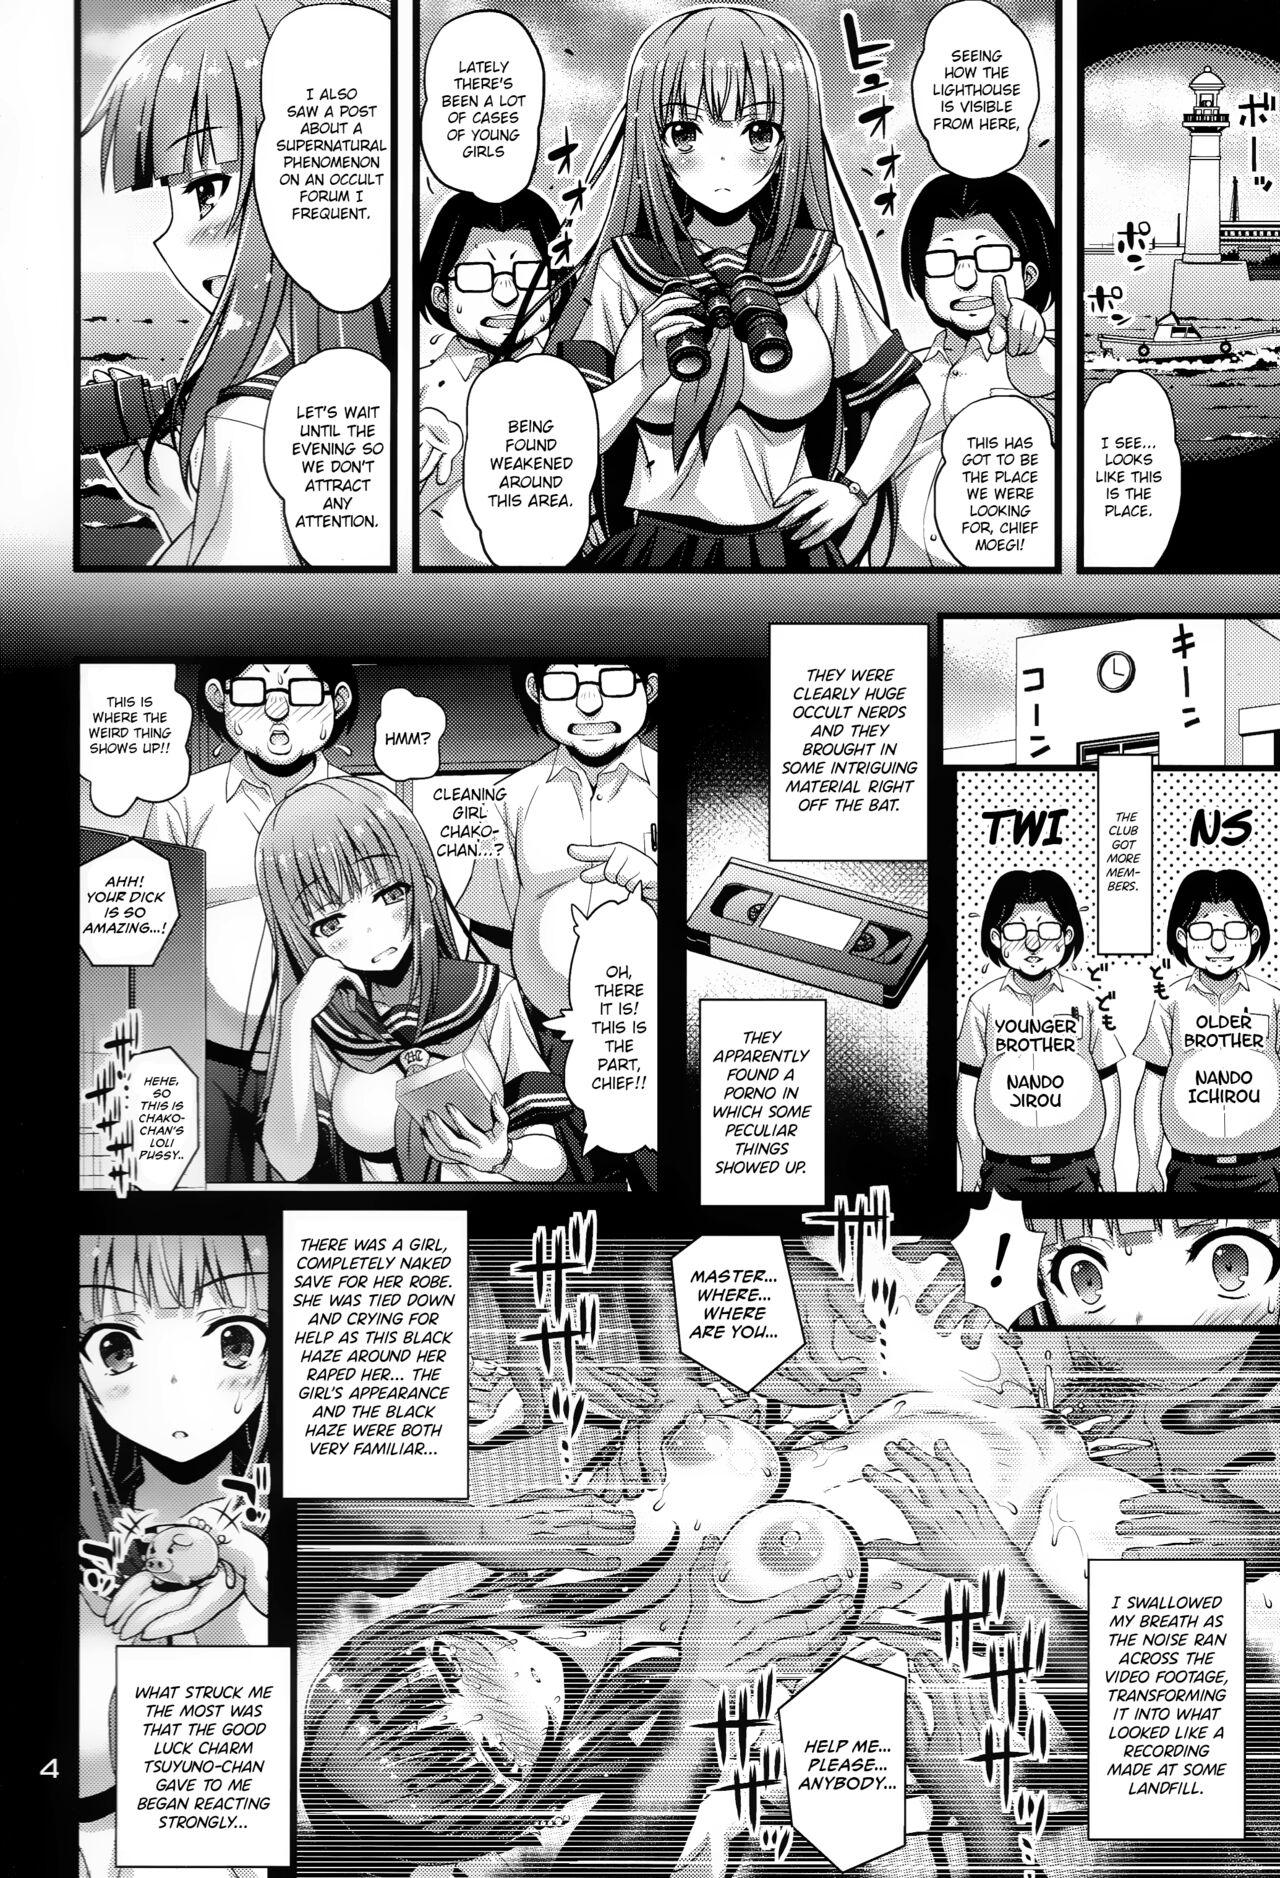 Stepsiblings Niku Miko no Utage Yon - Original Abuse - Page 3